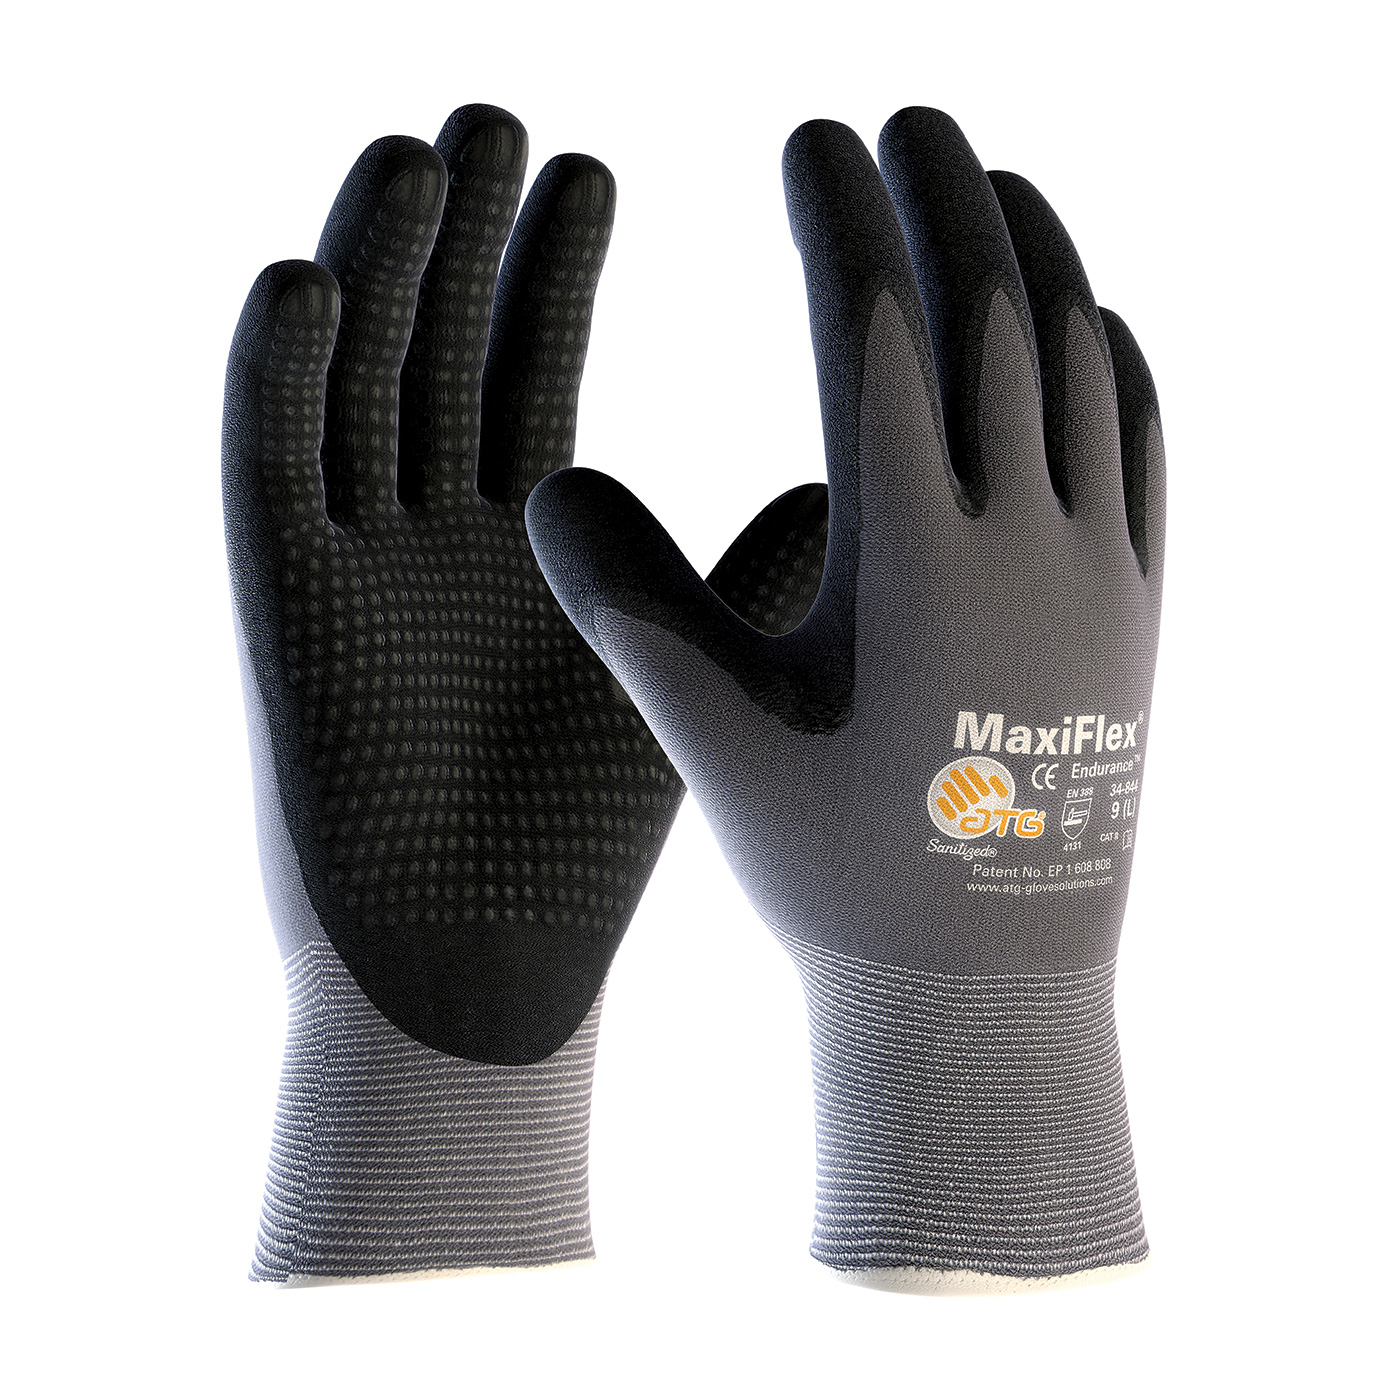 PIP 34-844/M MaxiFlex Endurance Seamless Knit Nylon Glove with Nitrile Coated MicroFoam Grip on Palm & Fingers - Micro Dot Palm - Medium PID-34 844 M